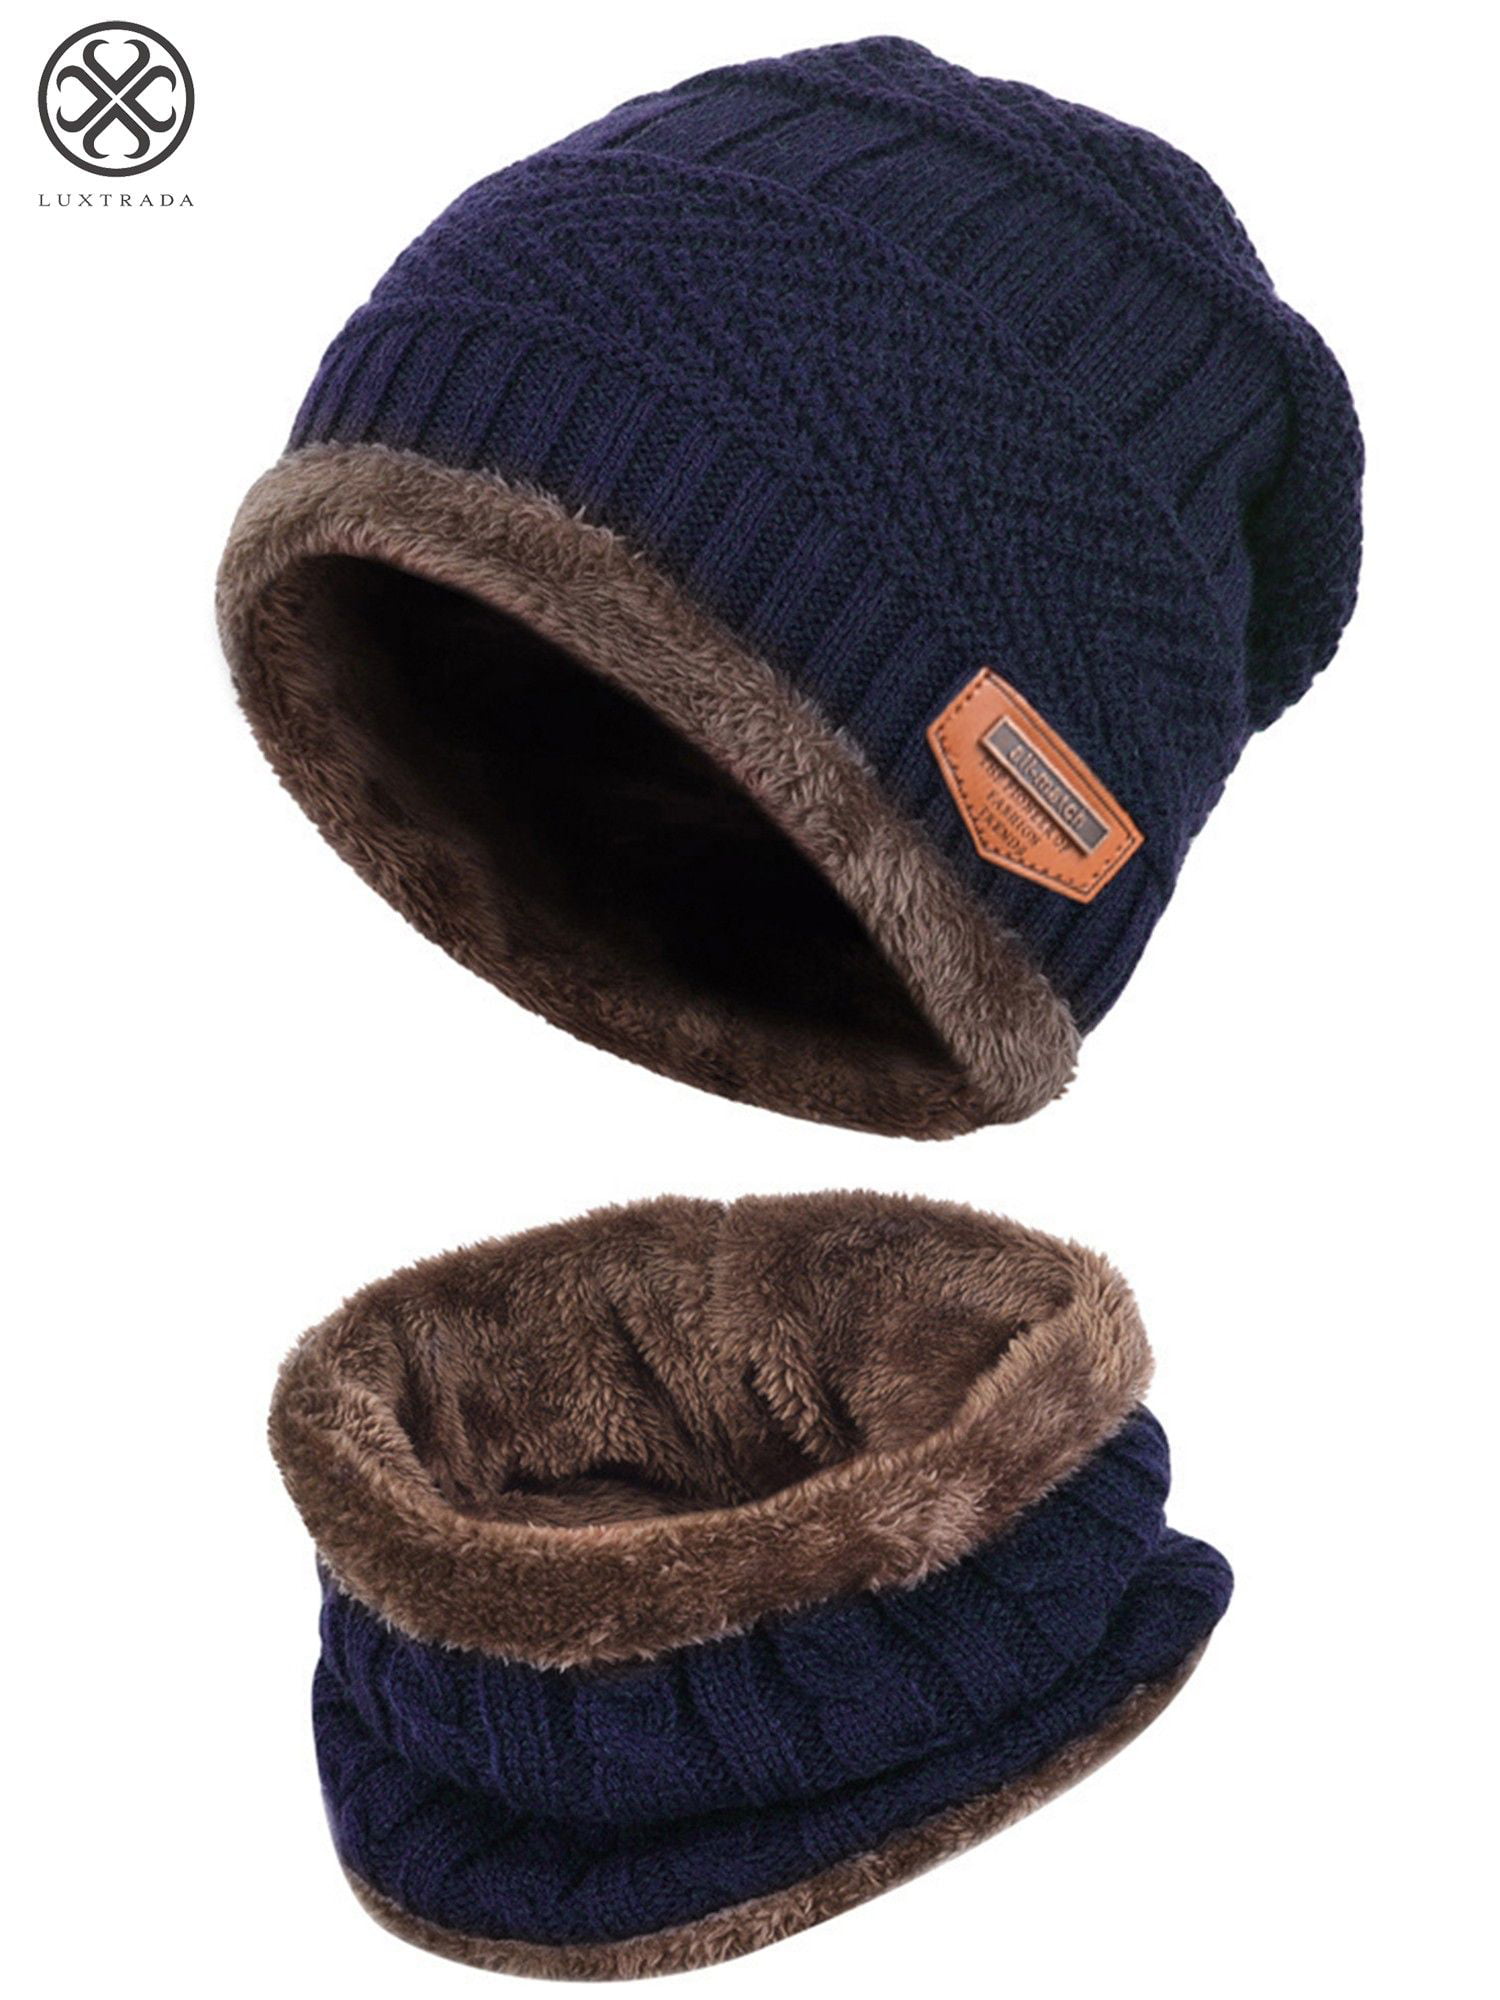 Girls Baby Kids Sweet Kitty Cat Ears Warm Knit Thermal Winter Ski Hat Cap Beanie 